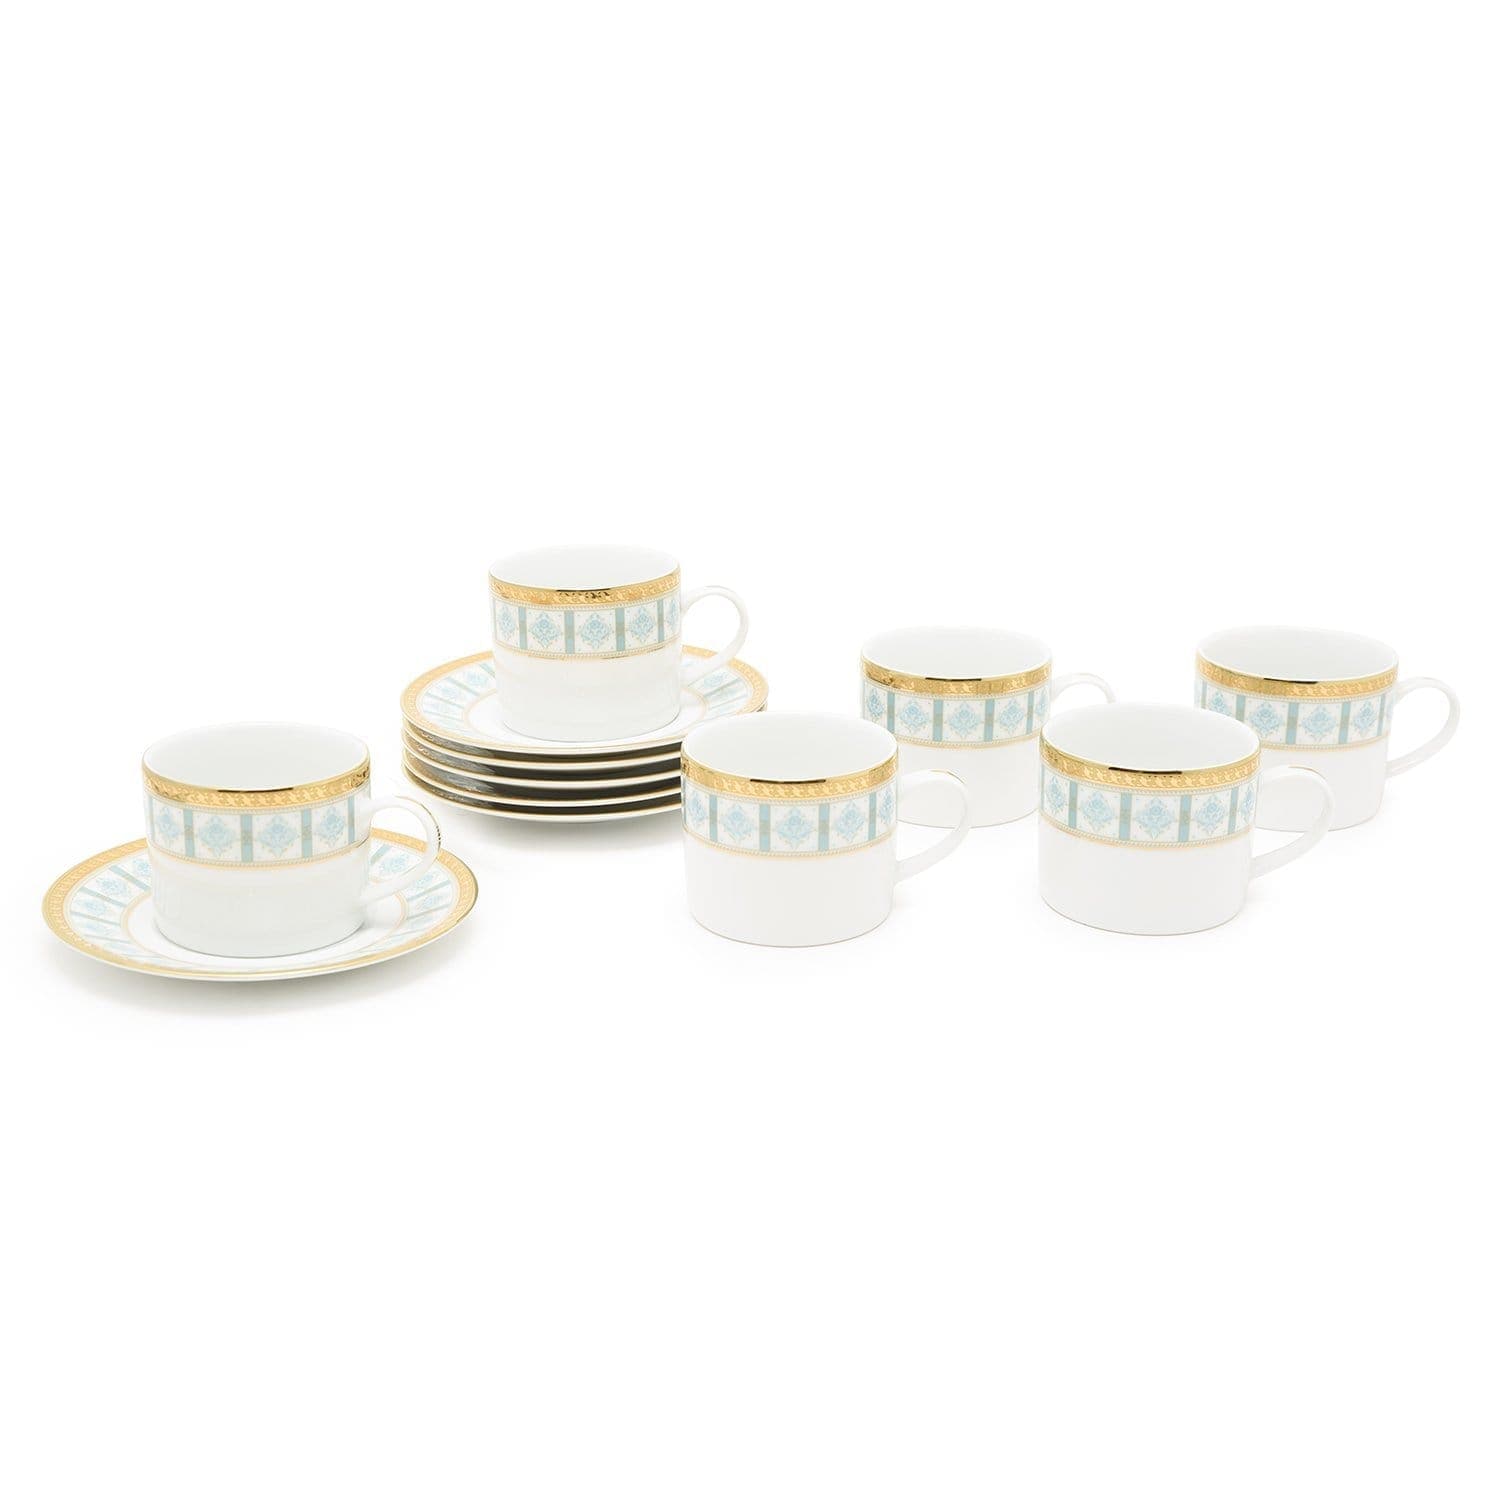 Dankotuwa Porcelain Moira Tea Cup and Saucer Set - Light Blue and Gold - MOI-687/689 - Jashanmal Home